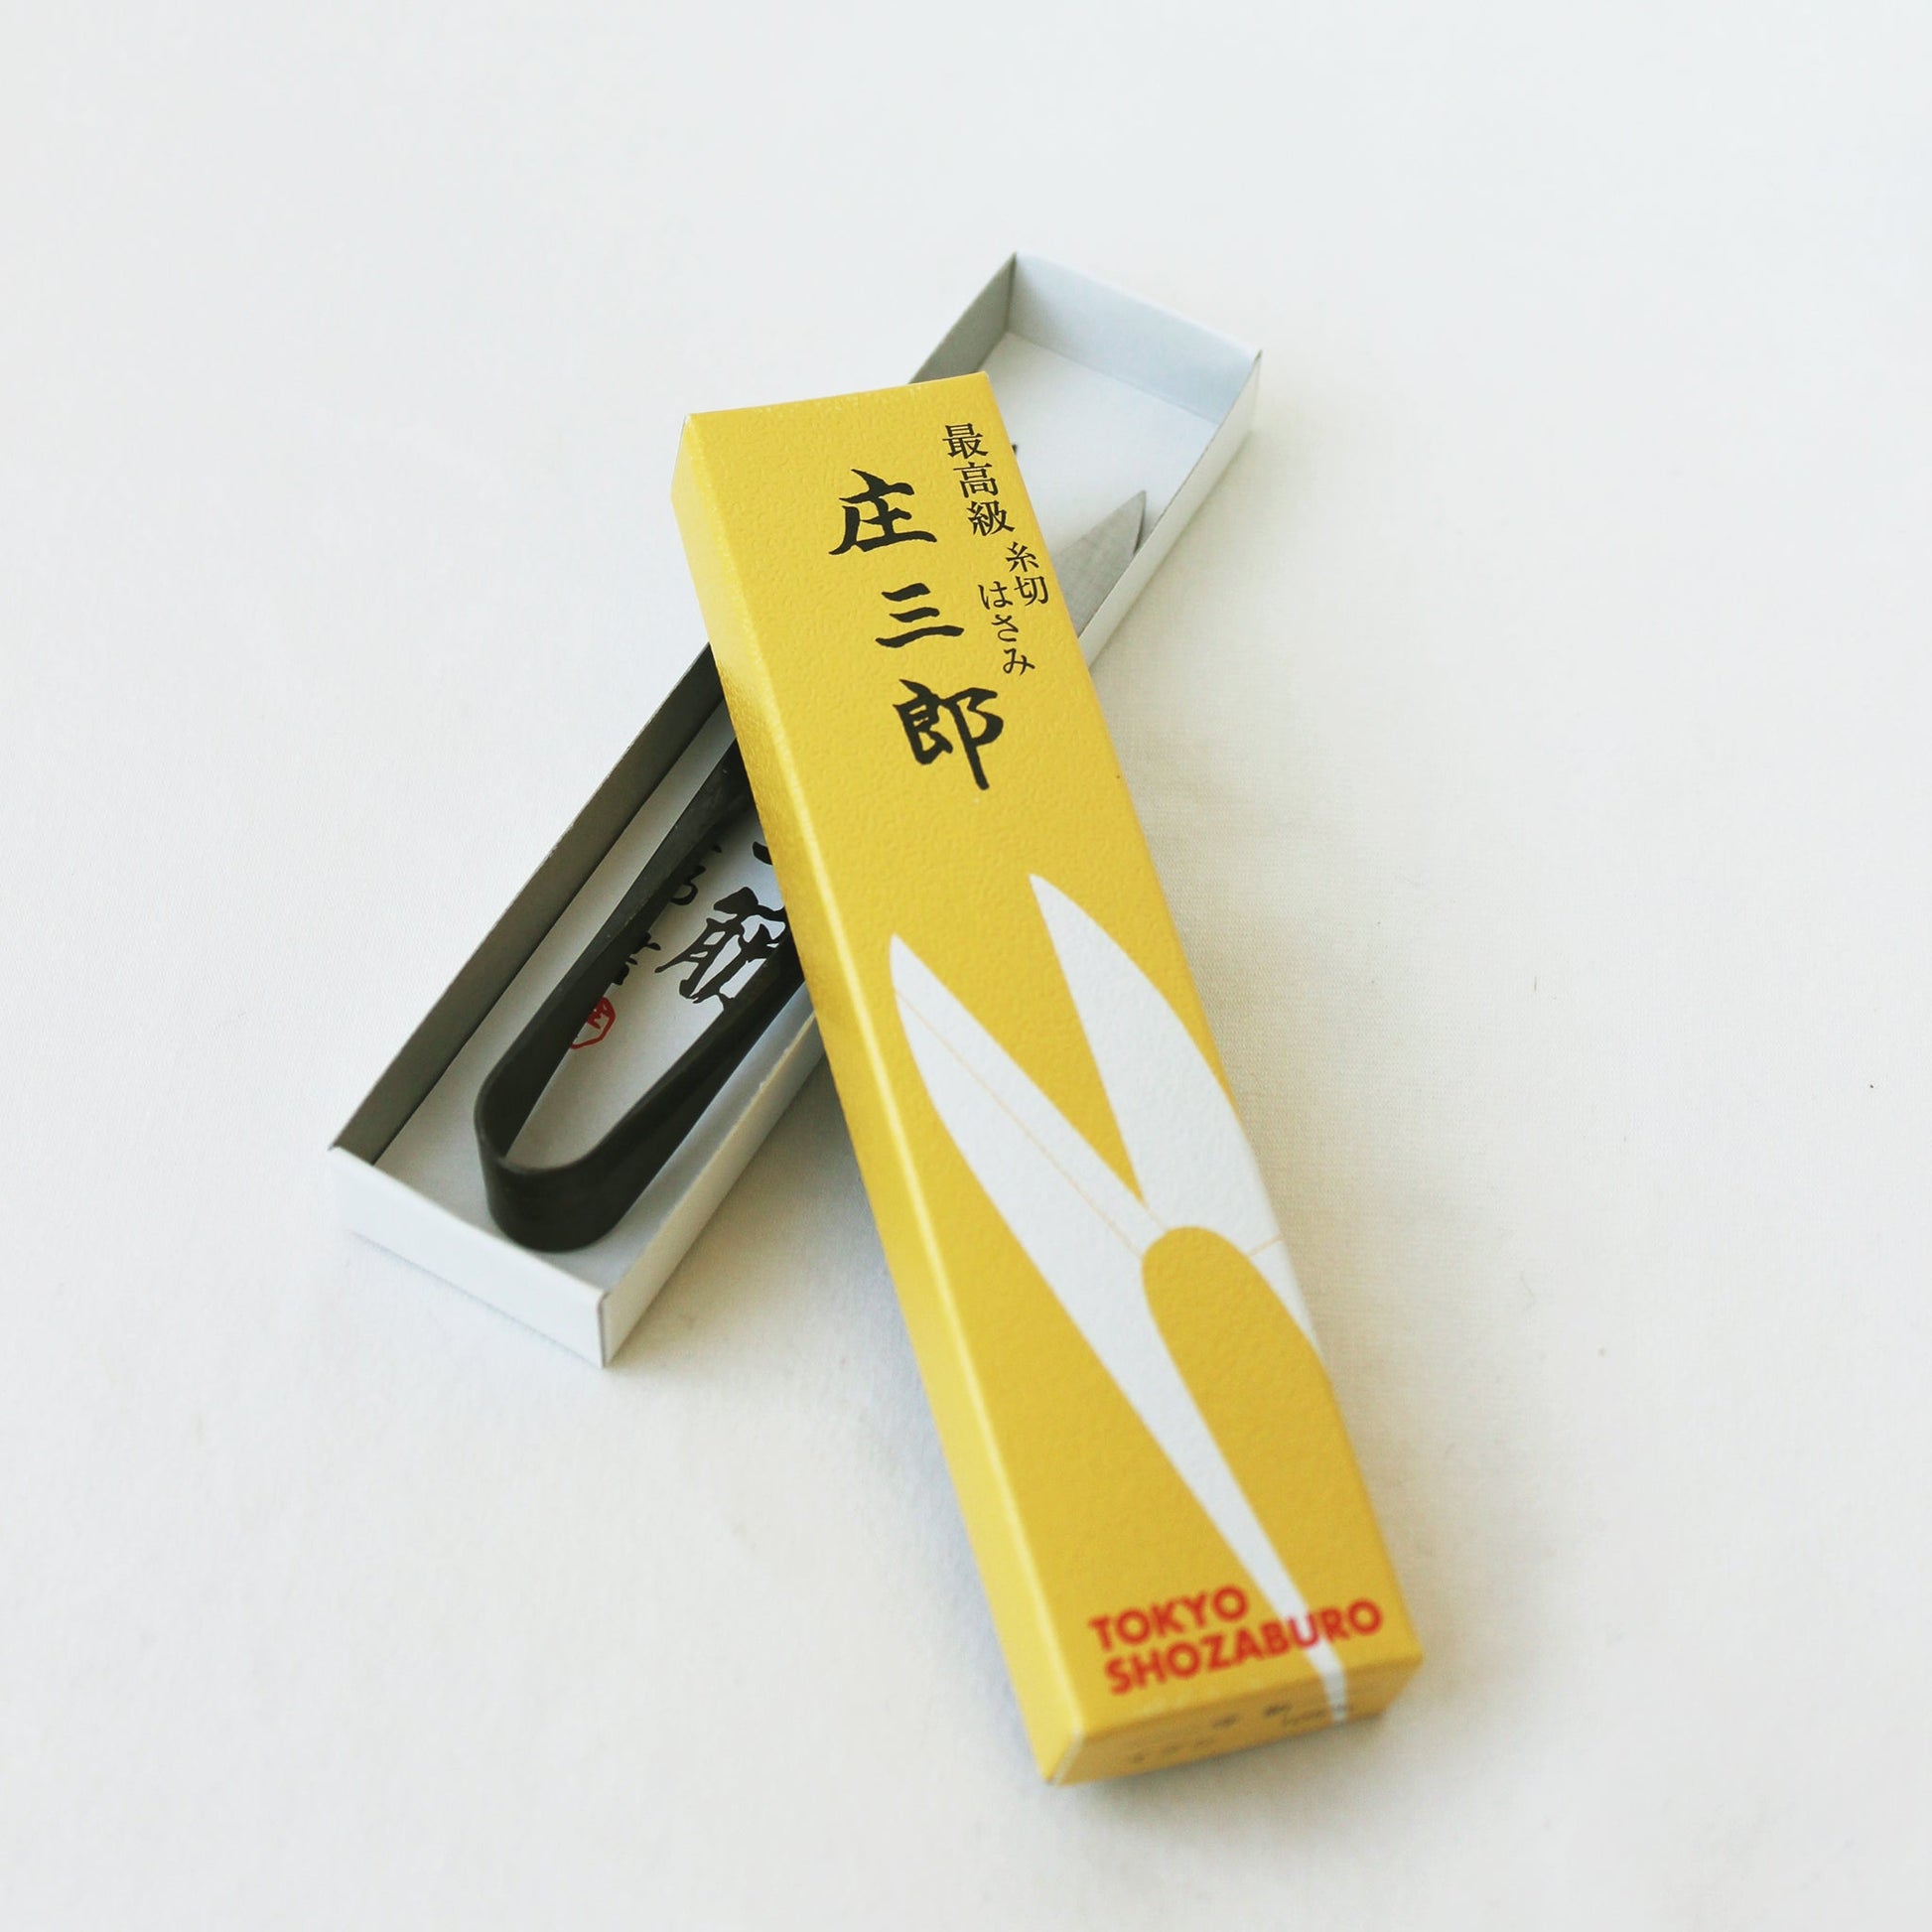 Shozaburo Japanese Thread Scissors in a Paper Box